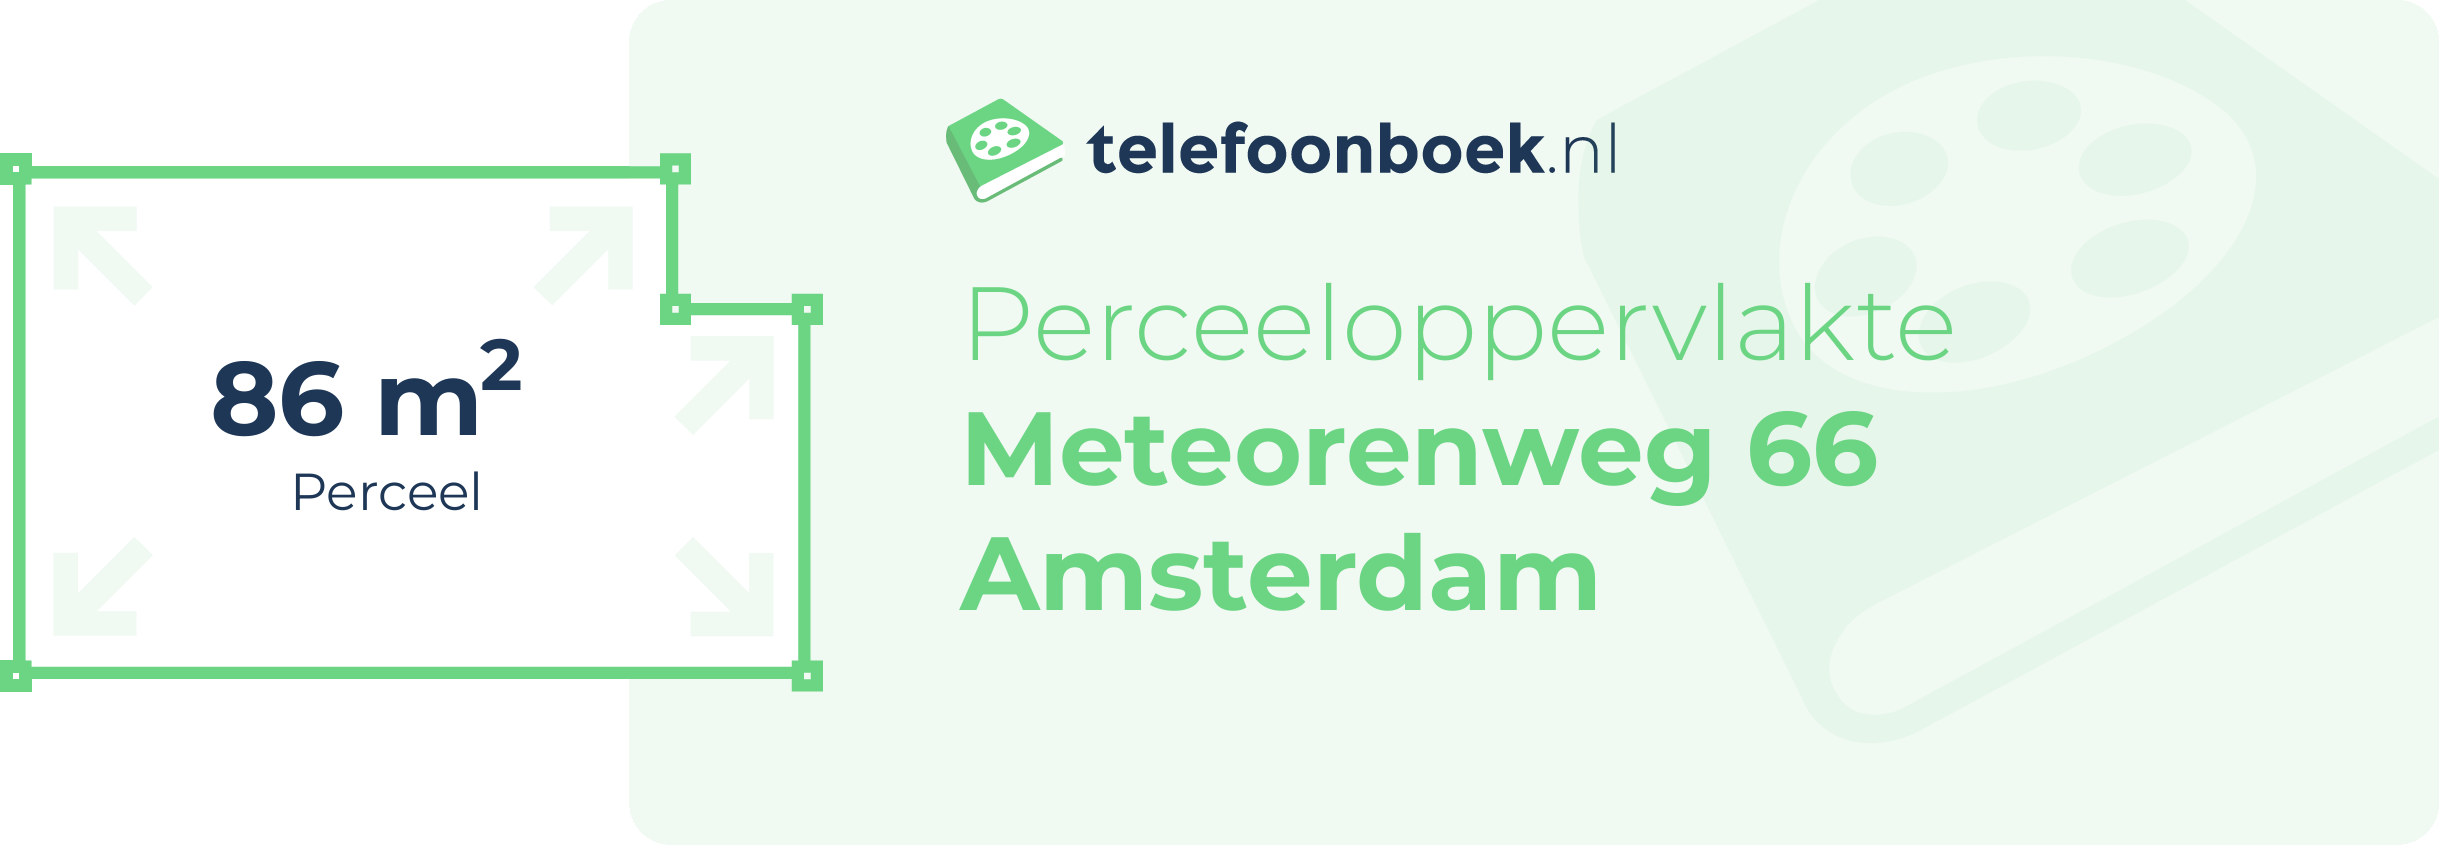 Perceeloppervlakte Meteorenweg 66 Amsterdam